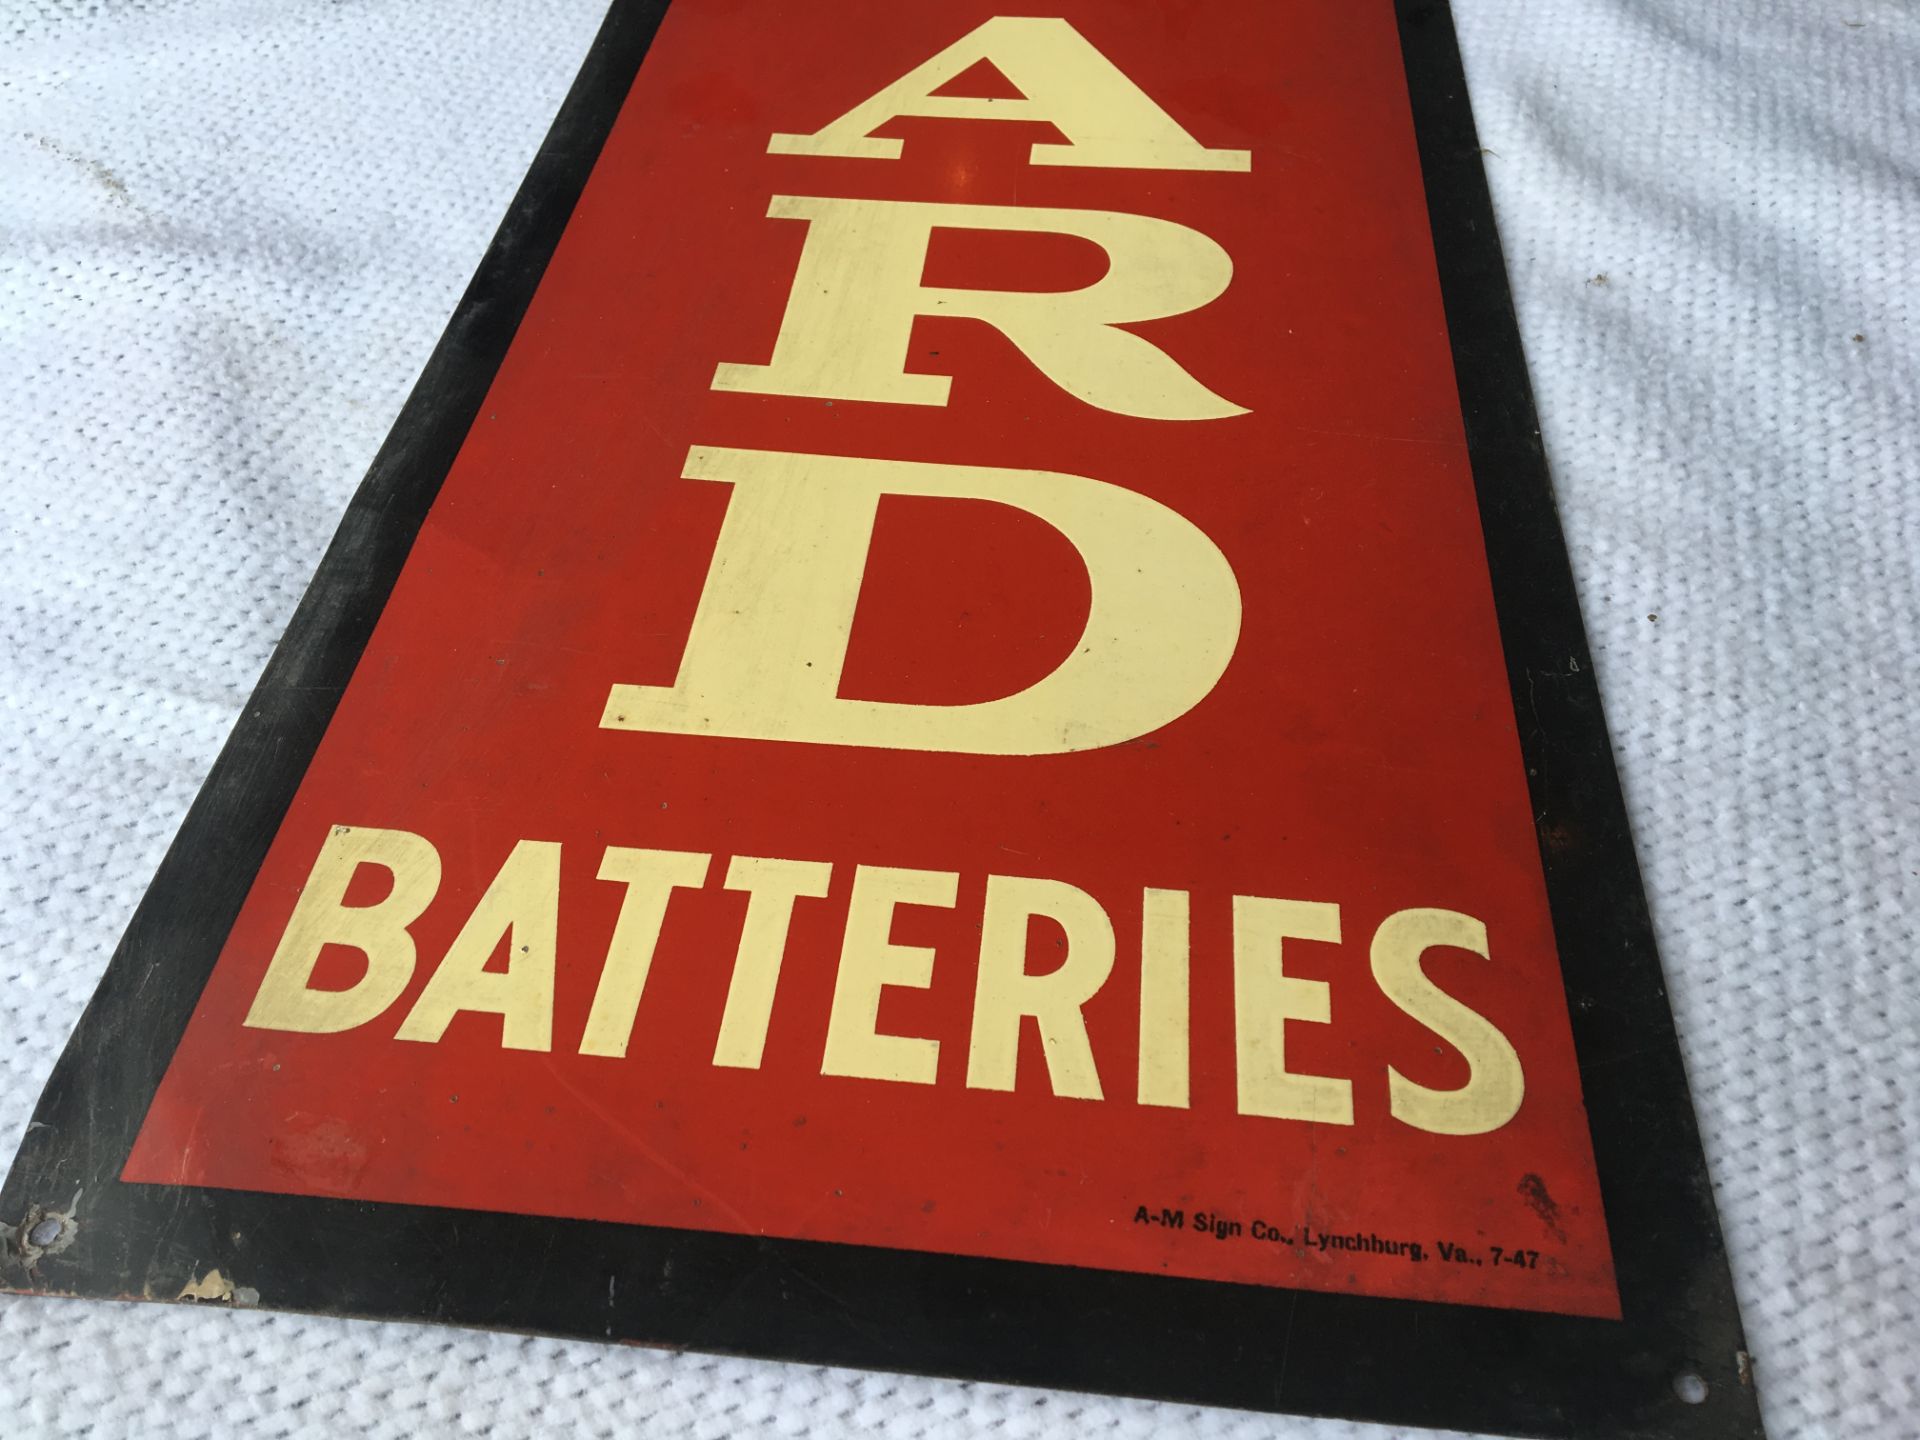 Willand Batteries, 11 ½” x 39 ½”, Metal Sign – A-M Sign Co. Lynchburg, VA. (7-47) - Image 2 of 2